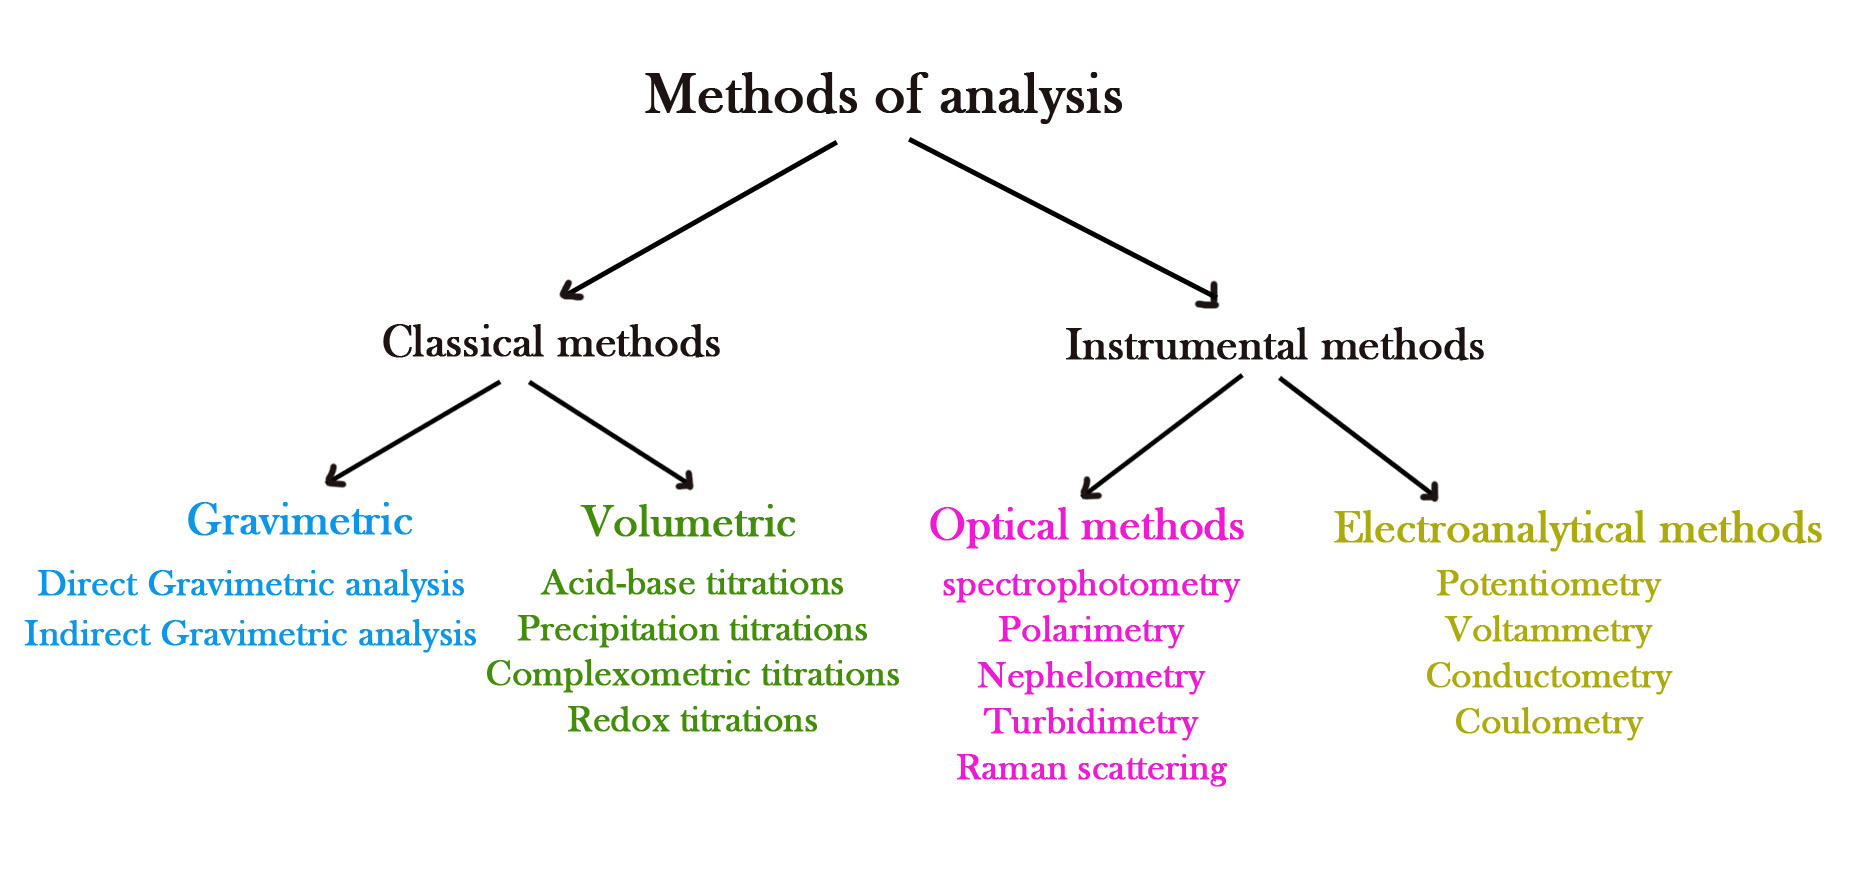 149-methods-of-analysis-madoverchemistry